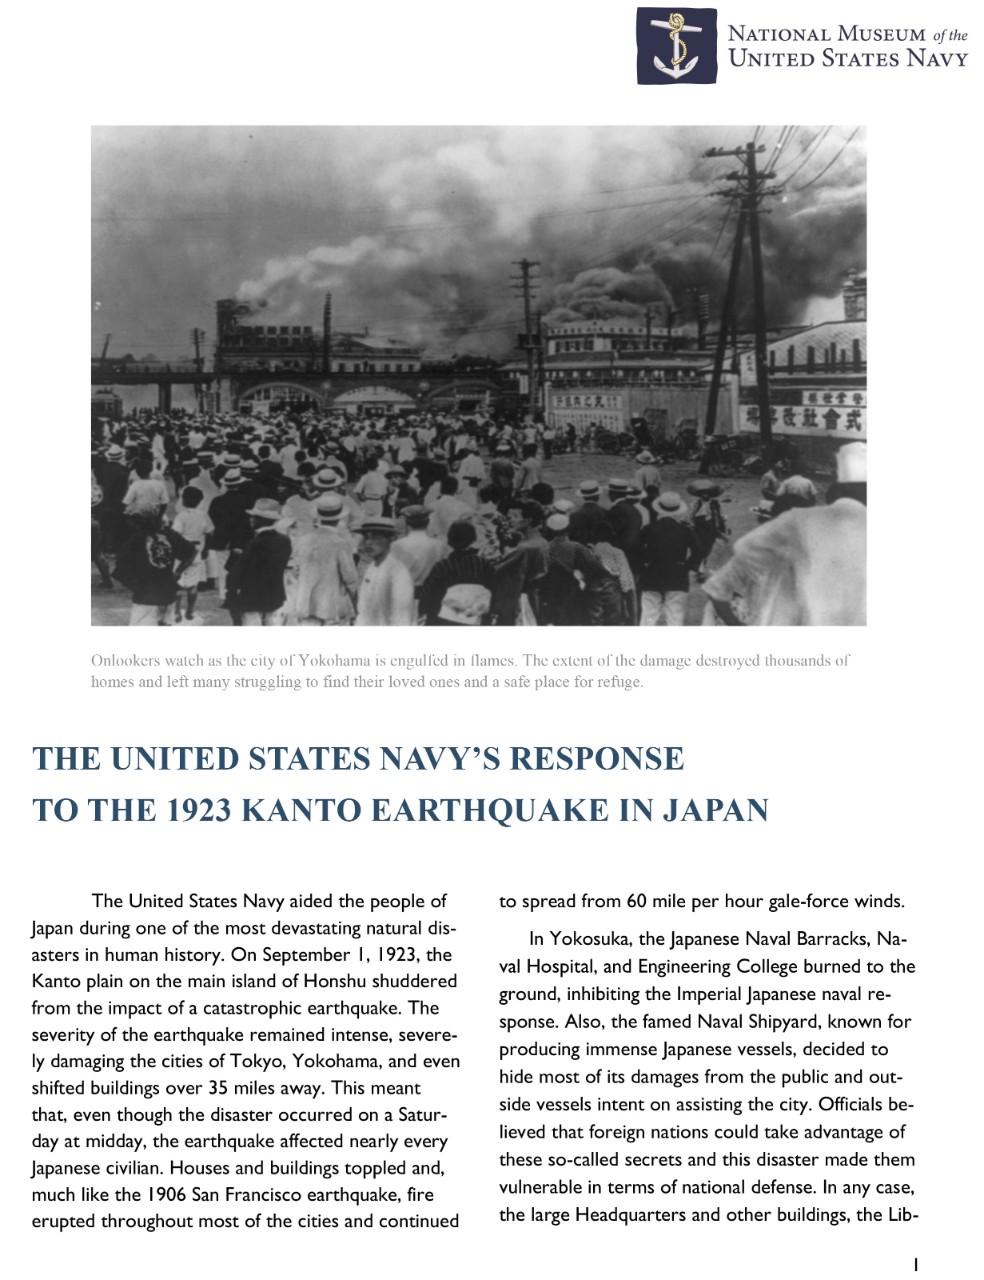 <p>NMUSN_United States Response to 1923 Kanto Earthquake_JPG</p>
